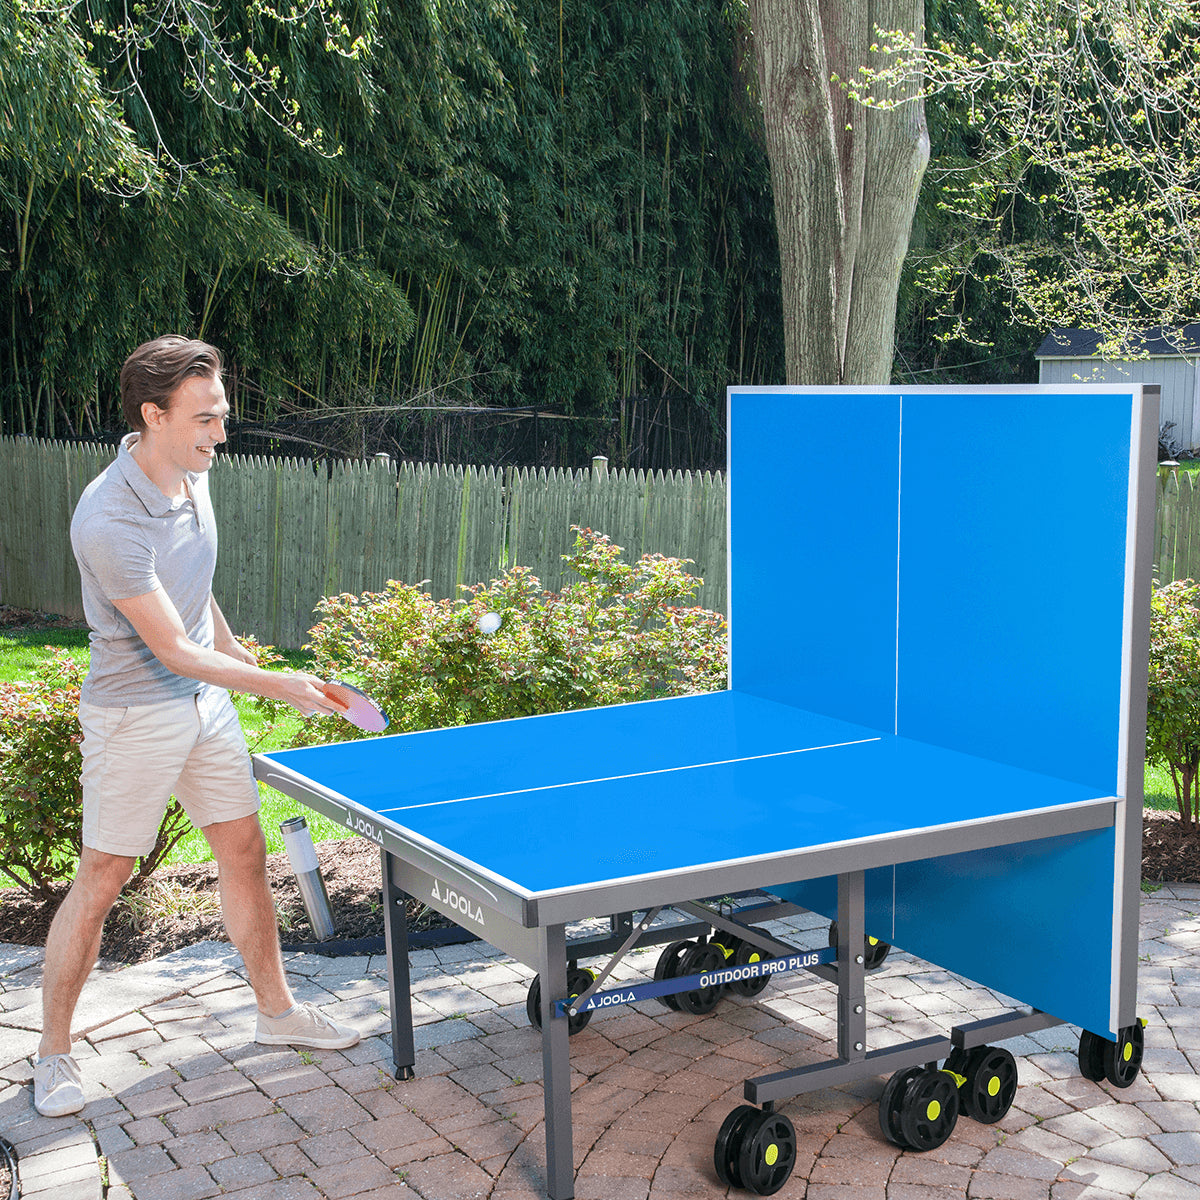 JOOLA Nova Pro Plus Outdoor Table Tennis Table